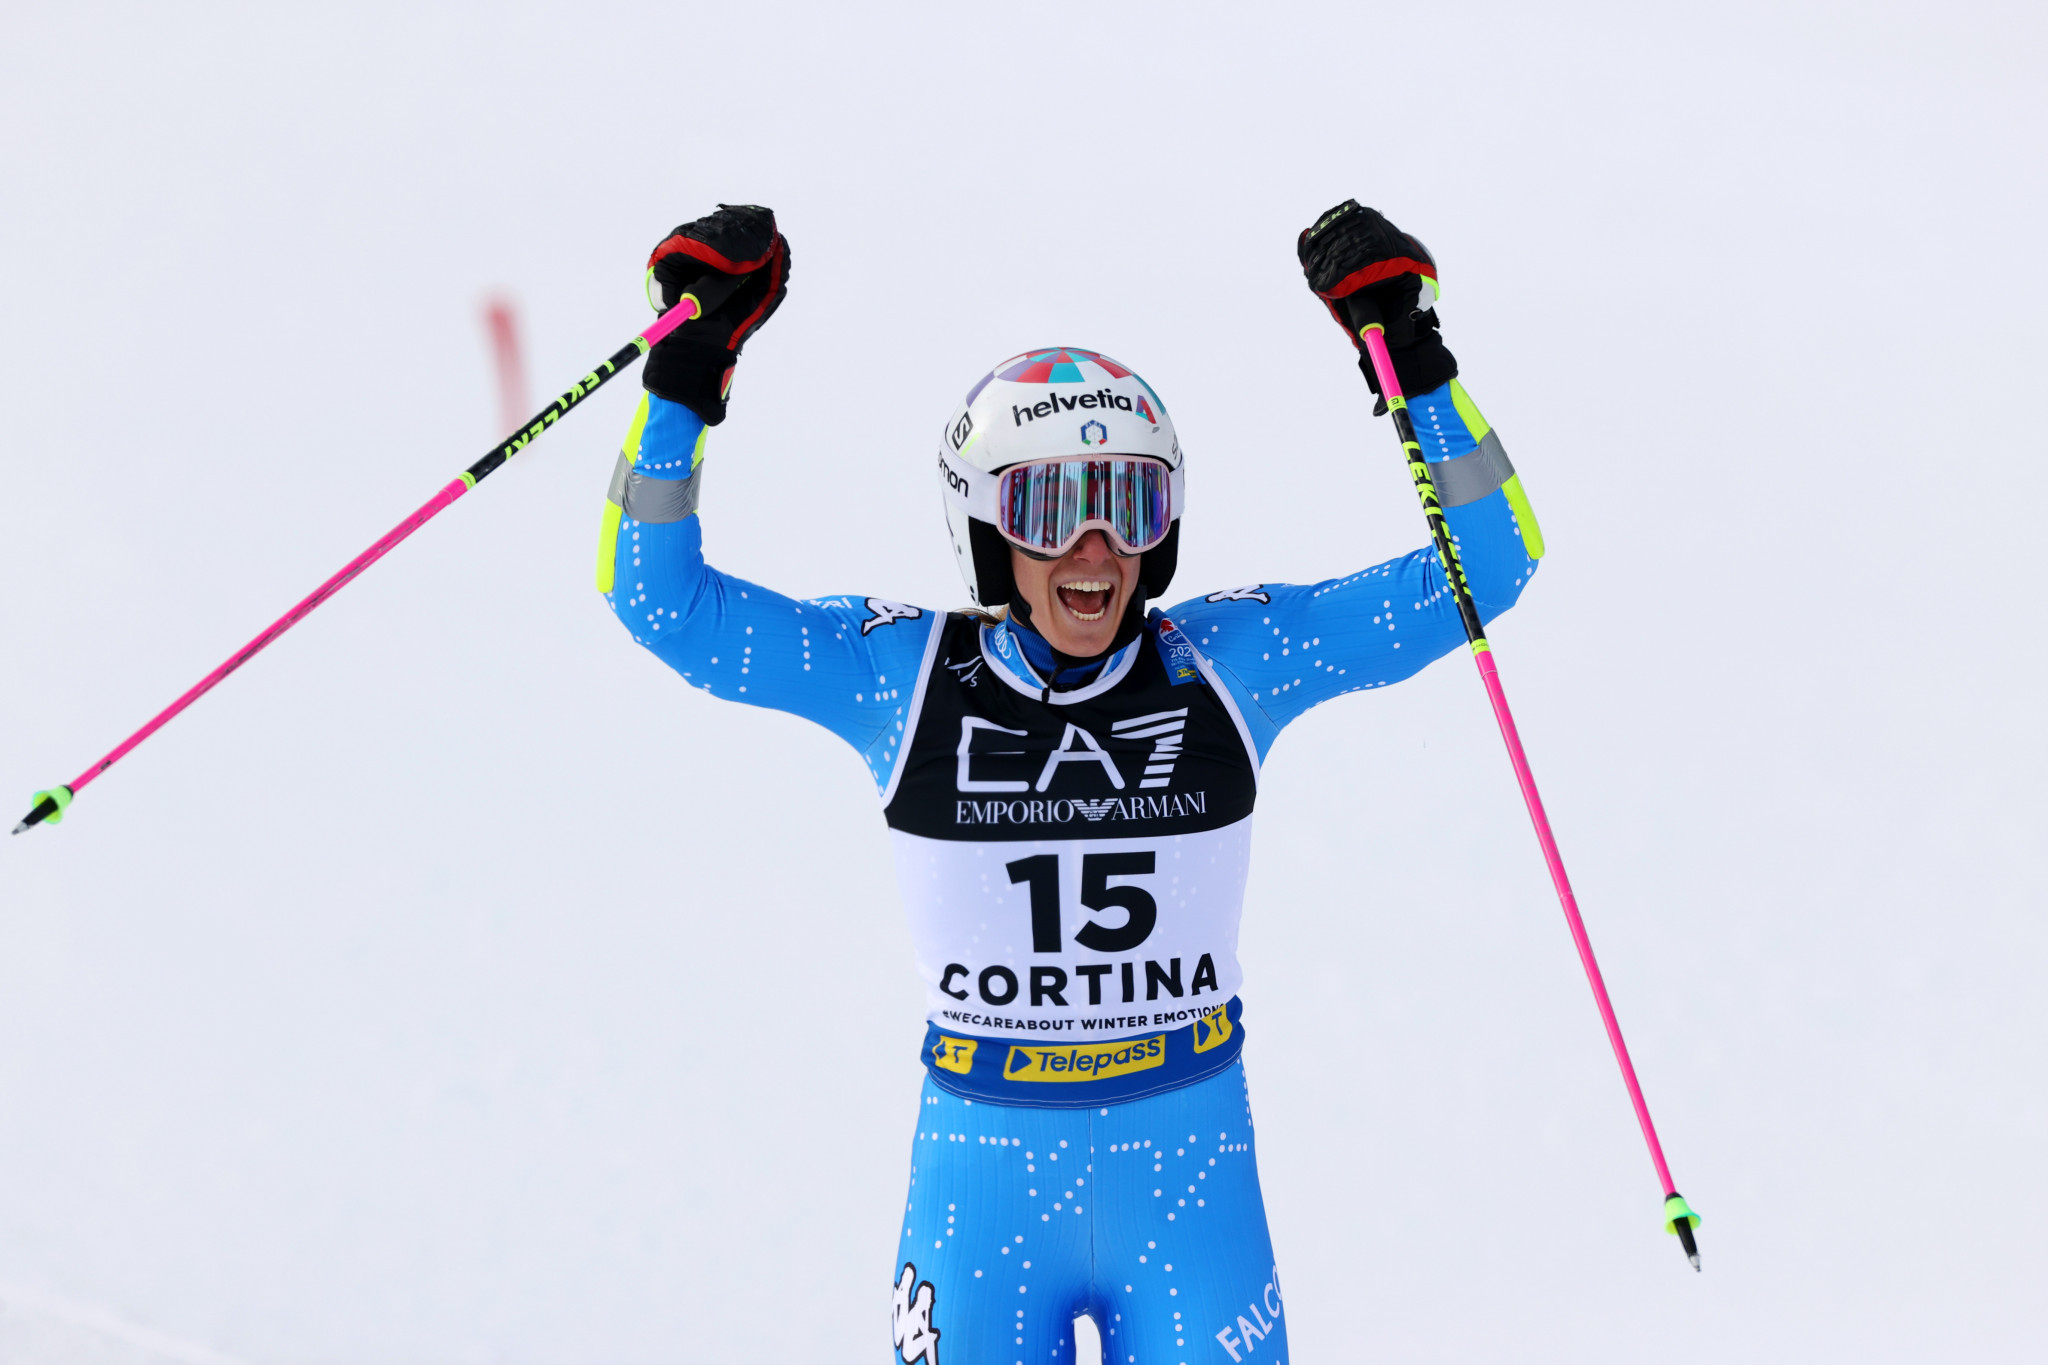 Bassino earns home gold at FIS Alpine Ski World Championships